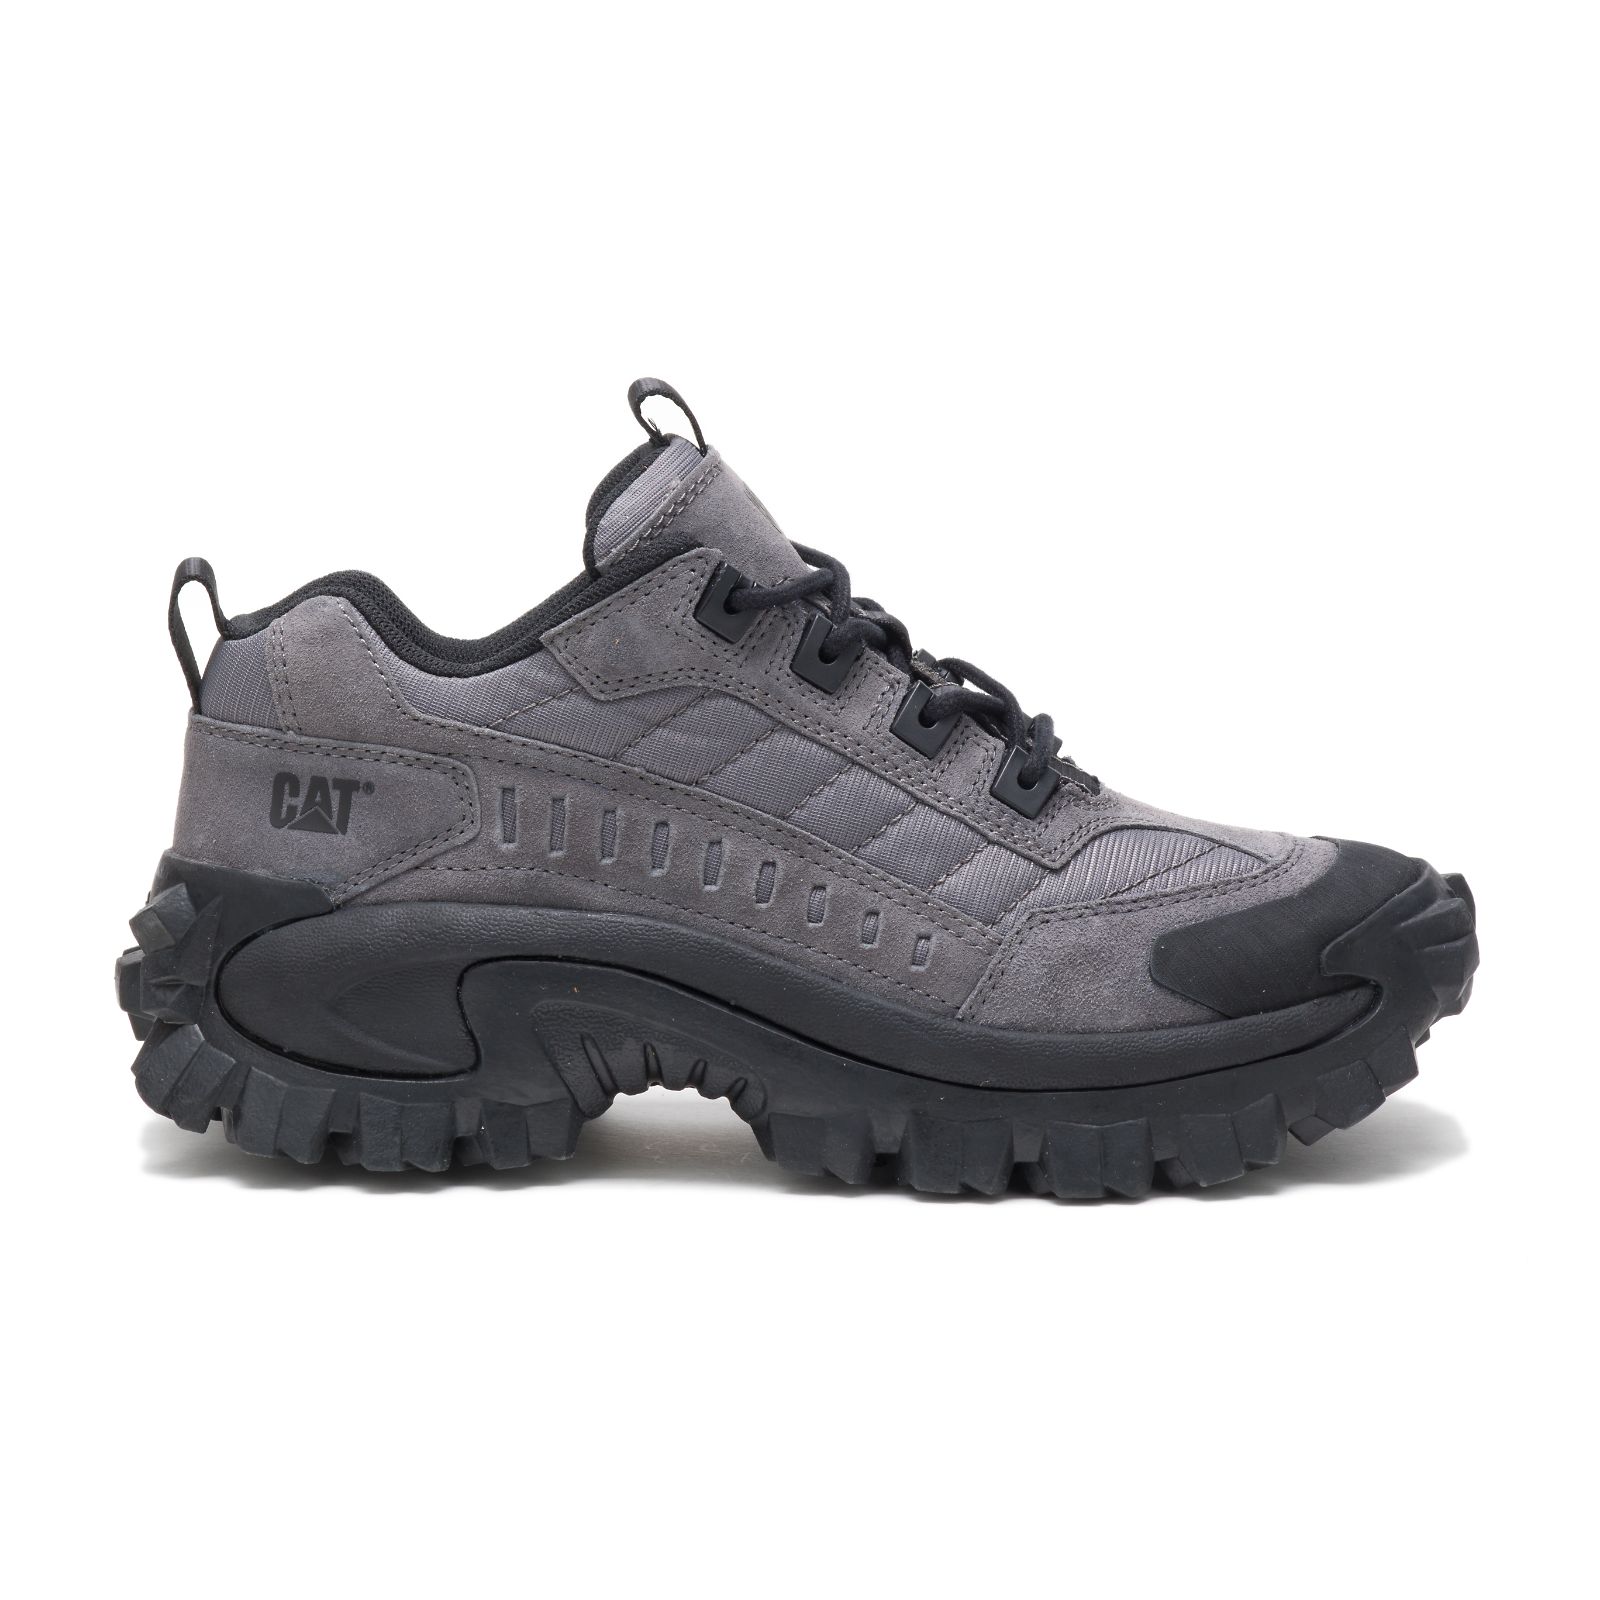 Caterpillar Casual Shoes Dubai - Caterpillar Intruder Mens - deep grey/Black PJXZUY751